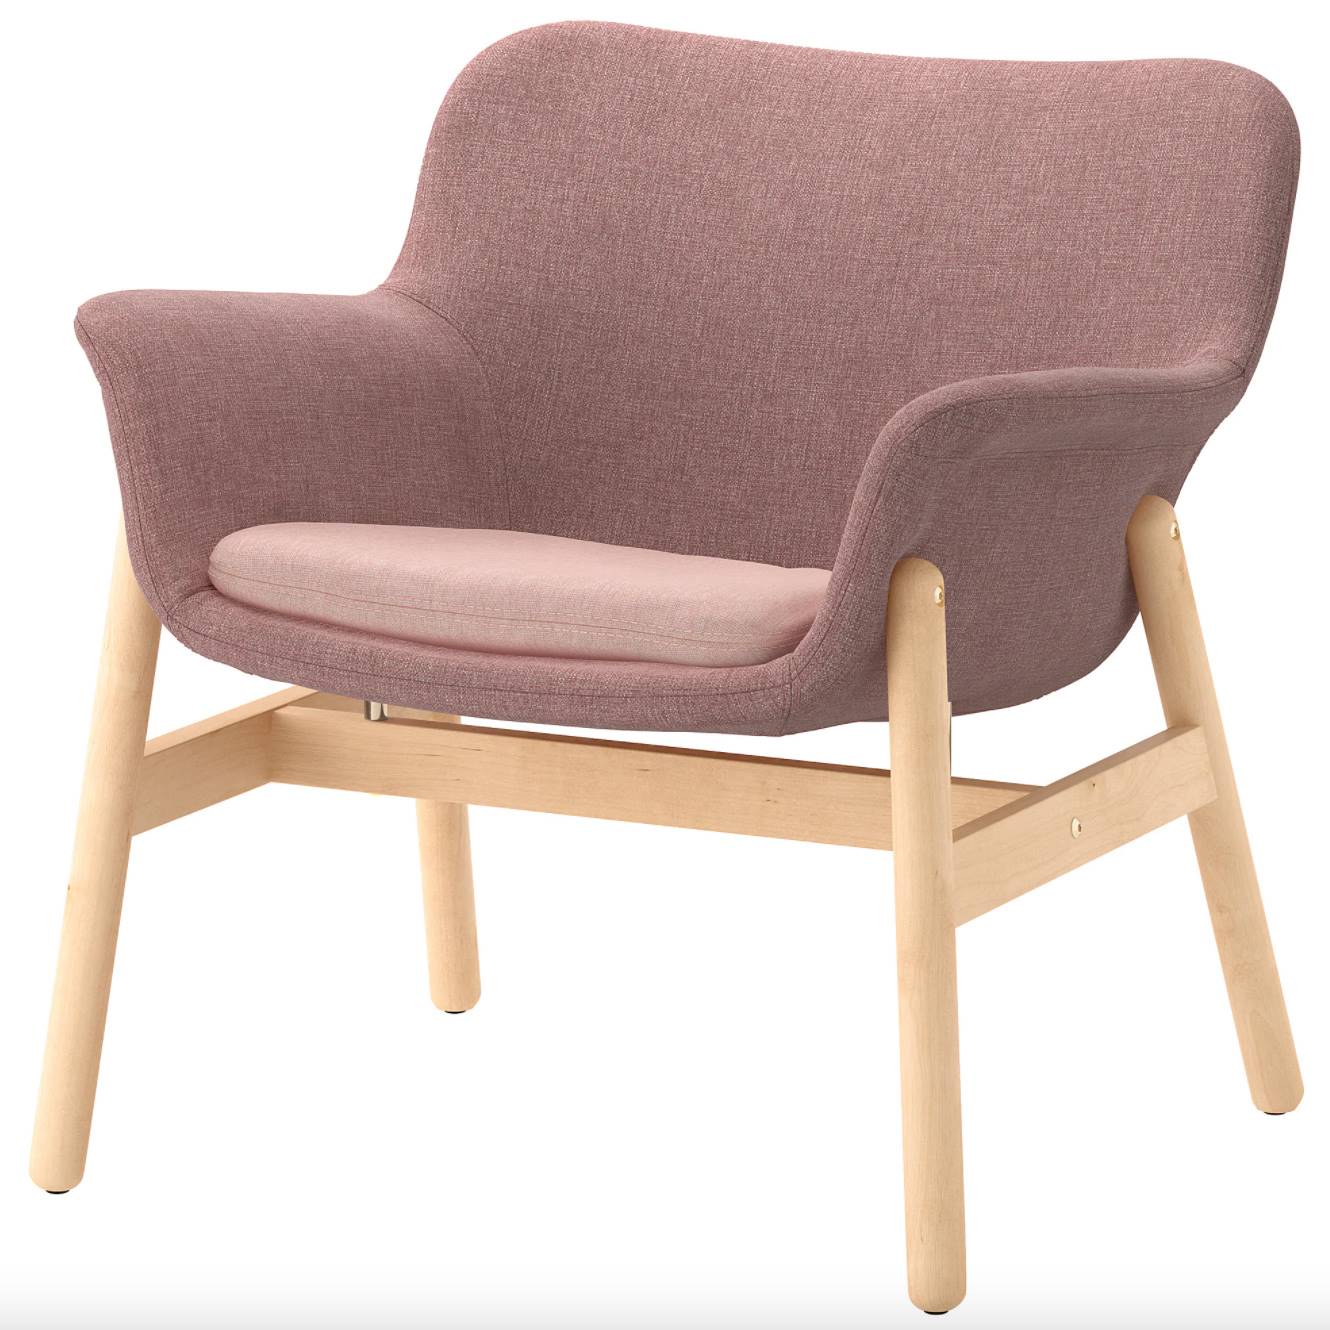 Sillón VEDBO con asiento en color rosa de IKEA